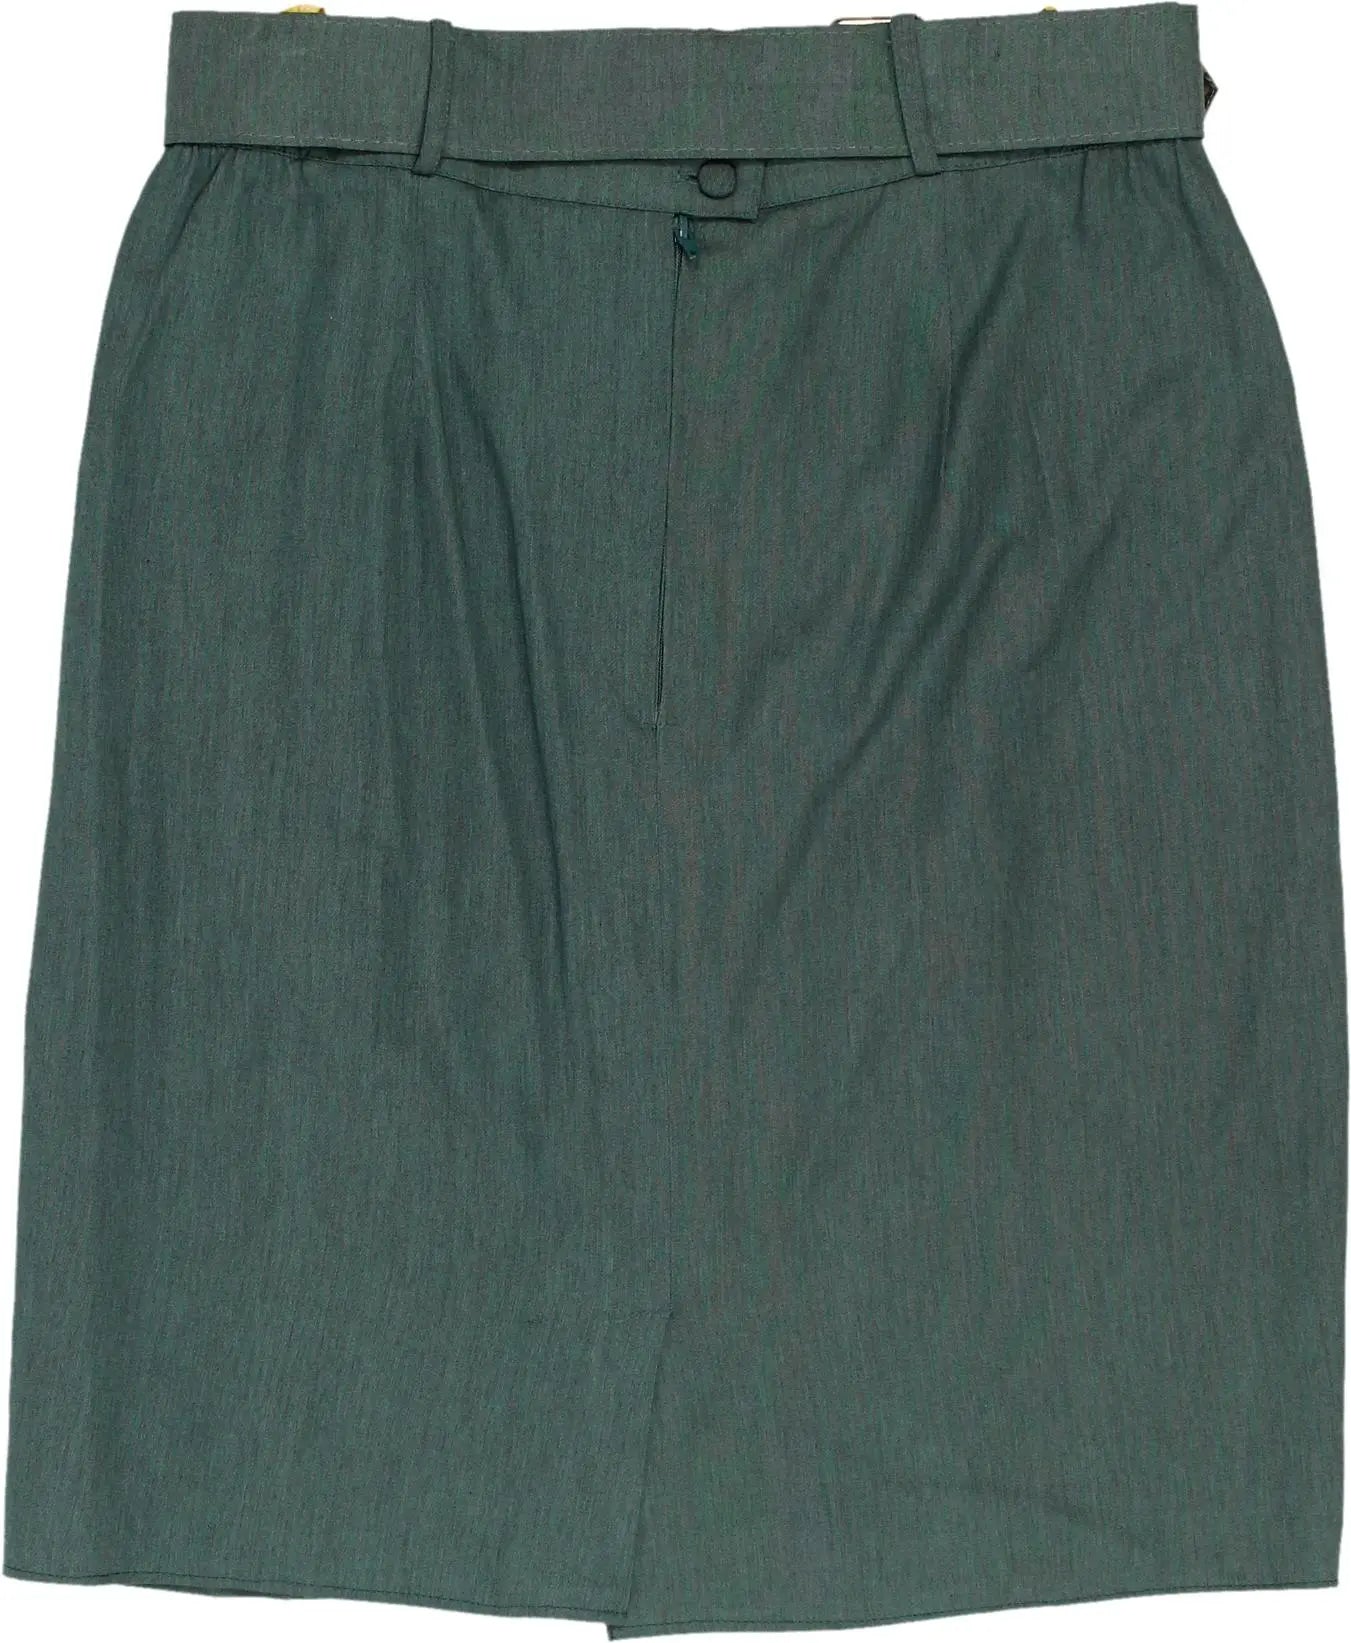 Miss Etam - Skirt- ThriftTale.com - Vintage and second handclothing